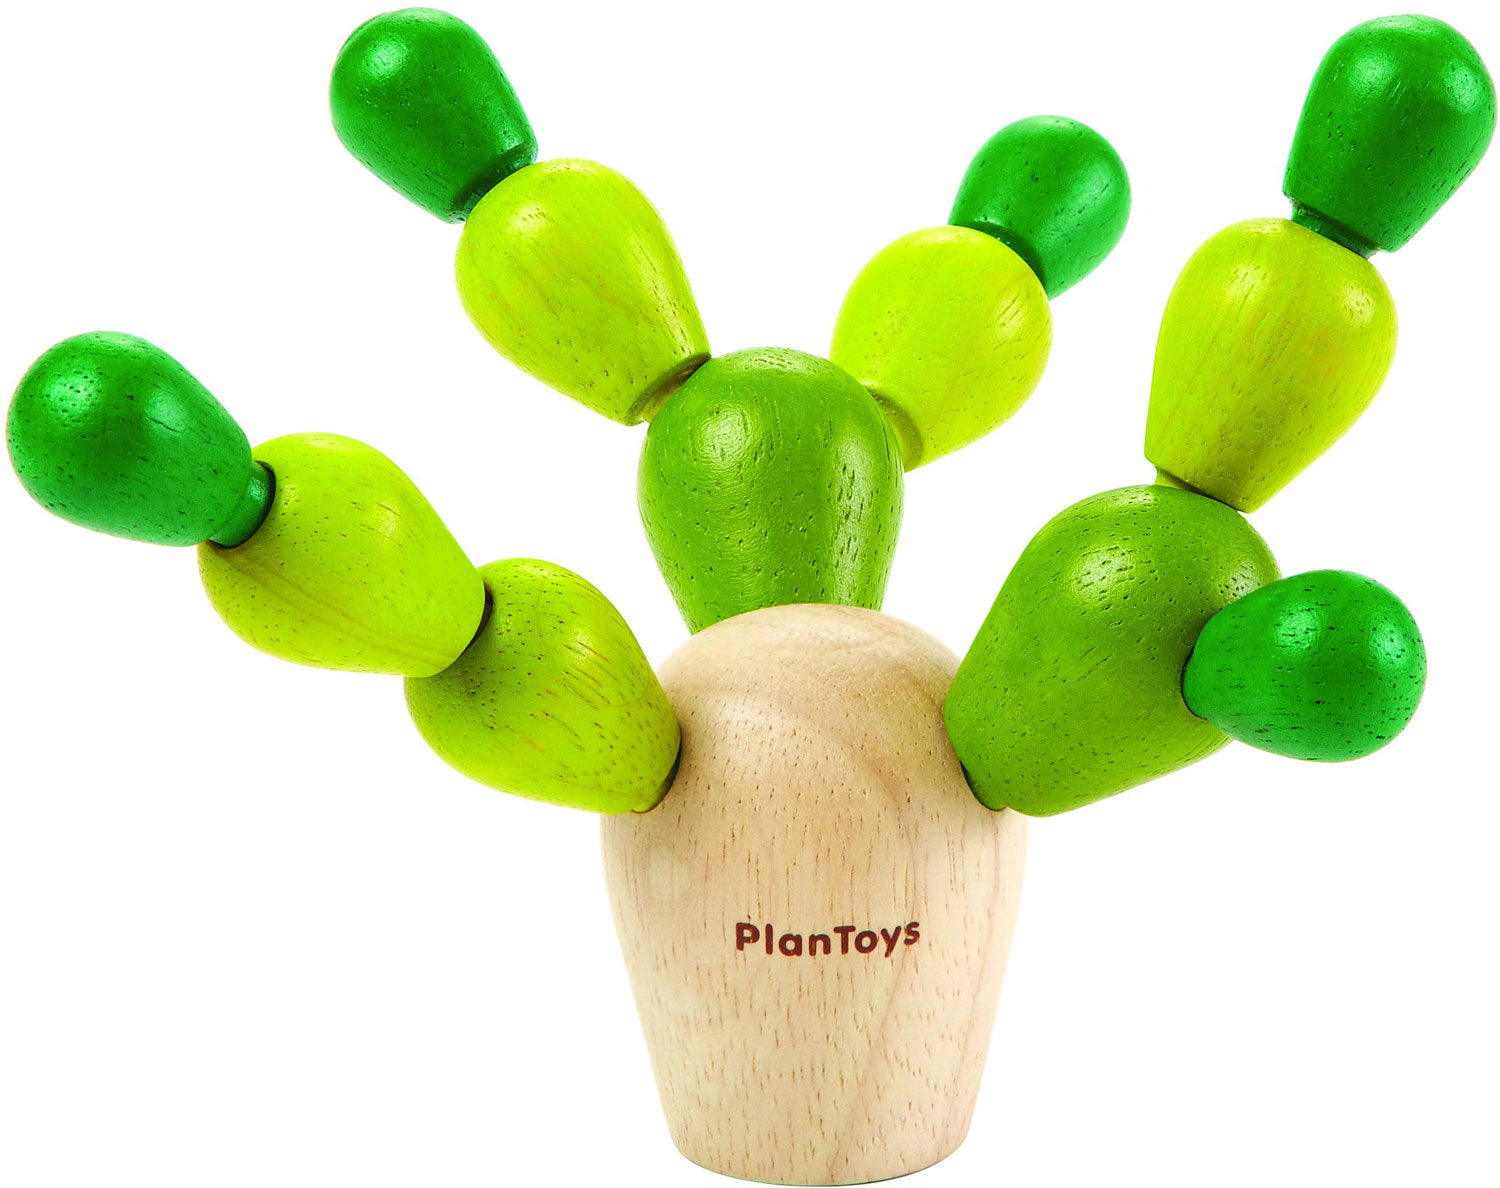 Balancing Cactus Mini - Green - Plan Toys